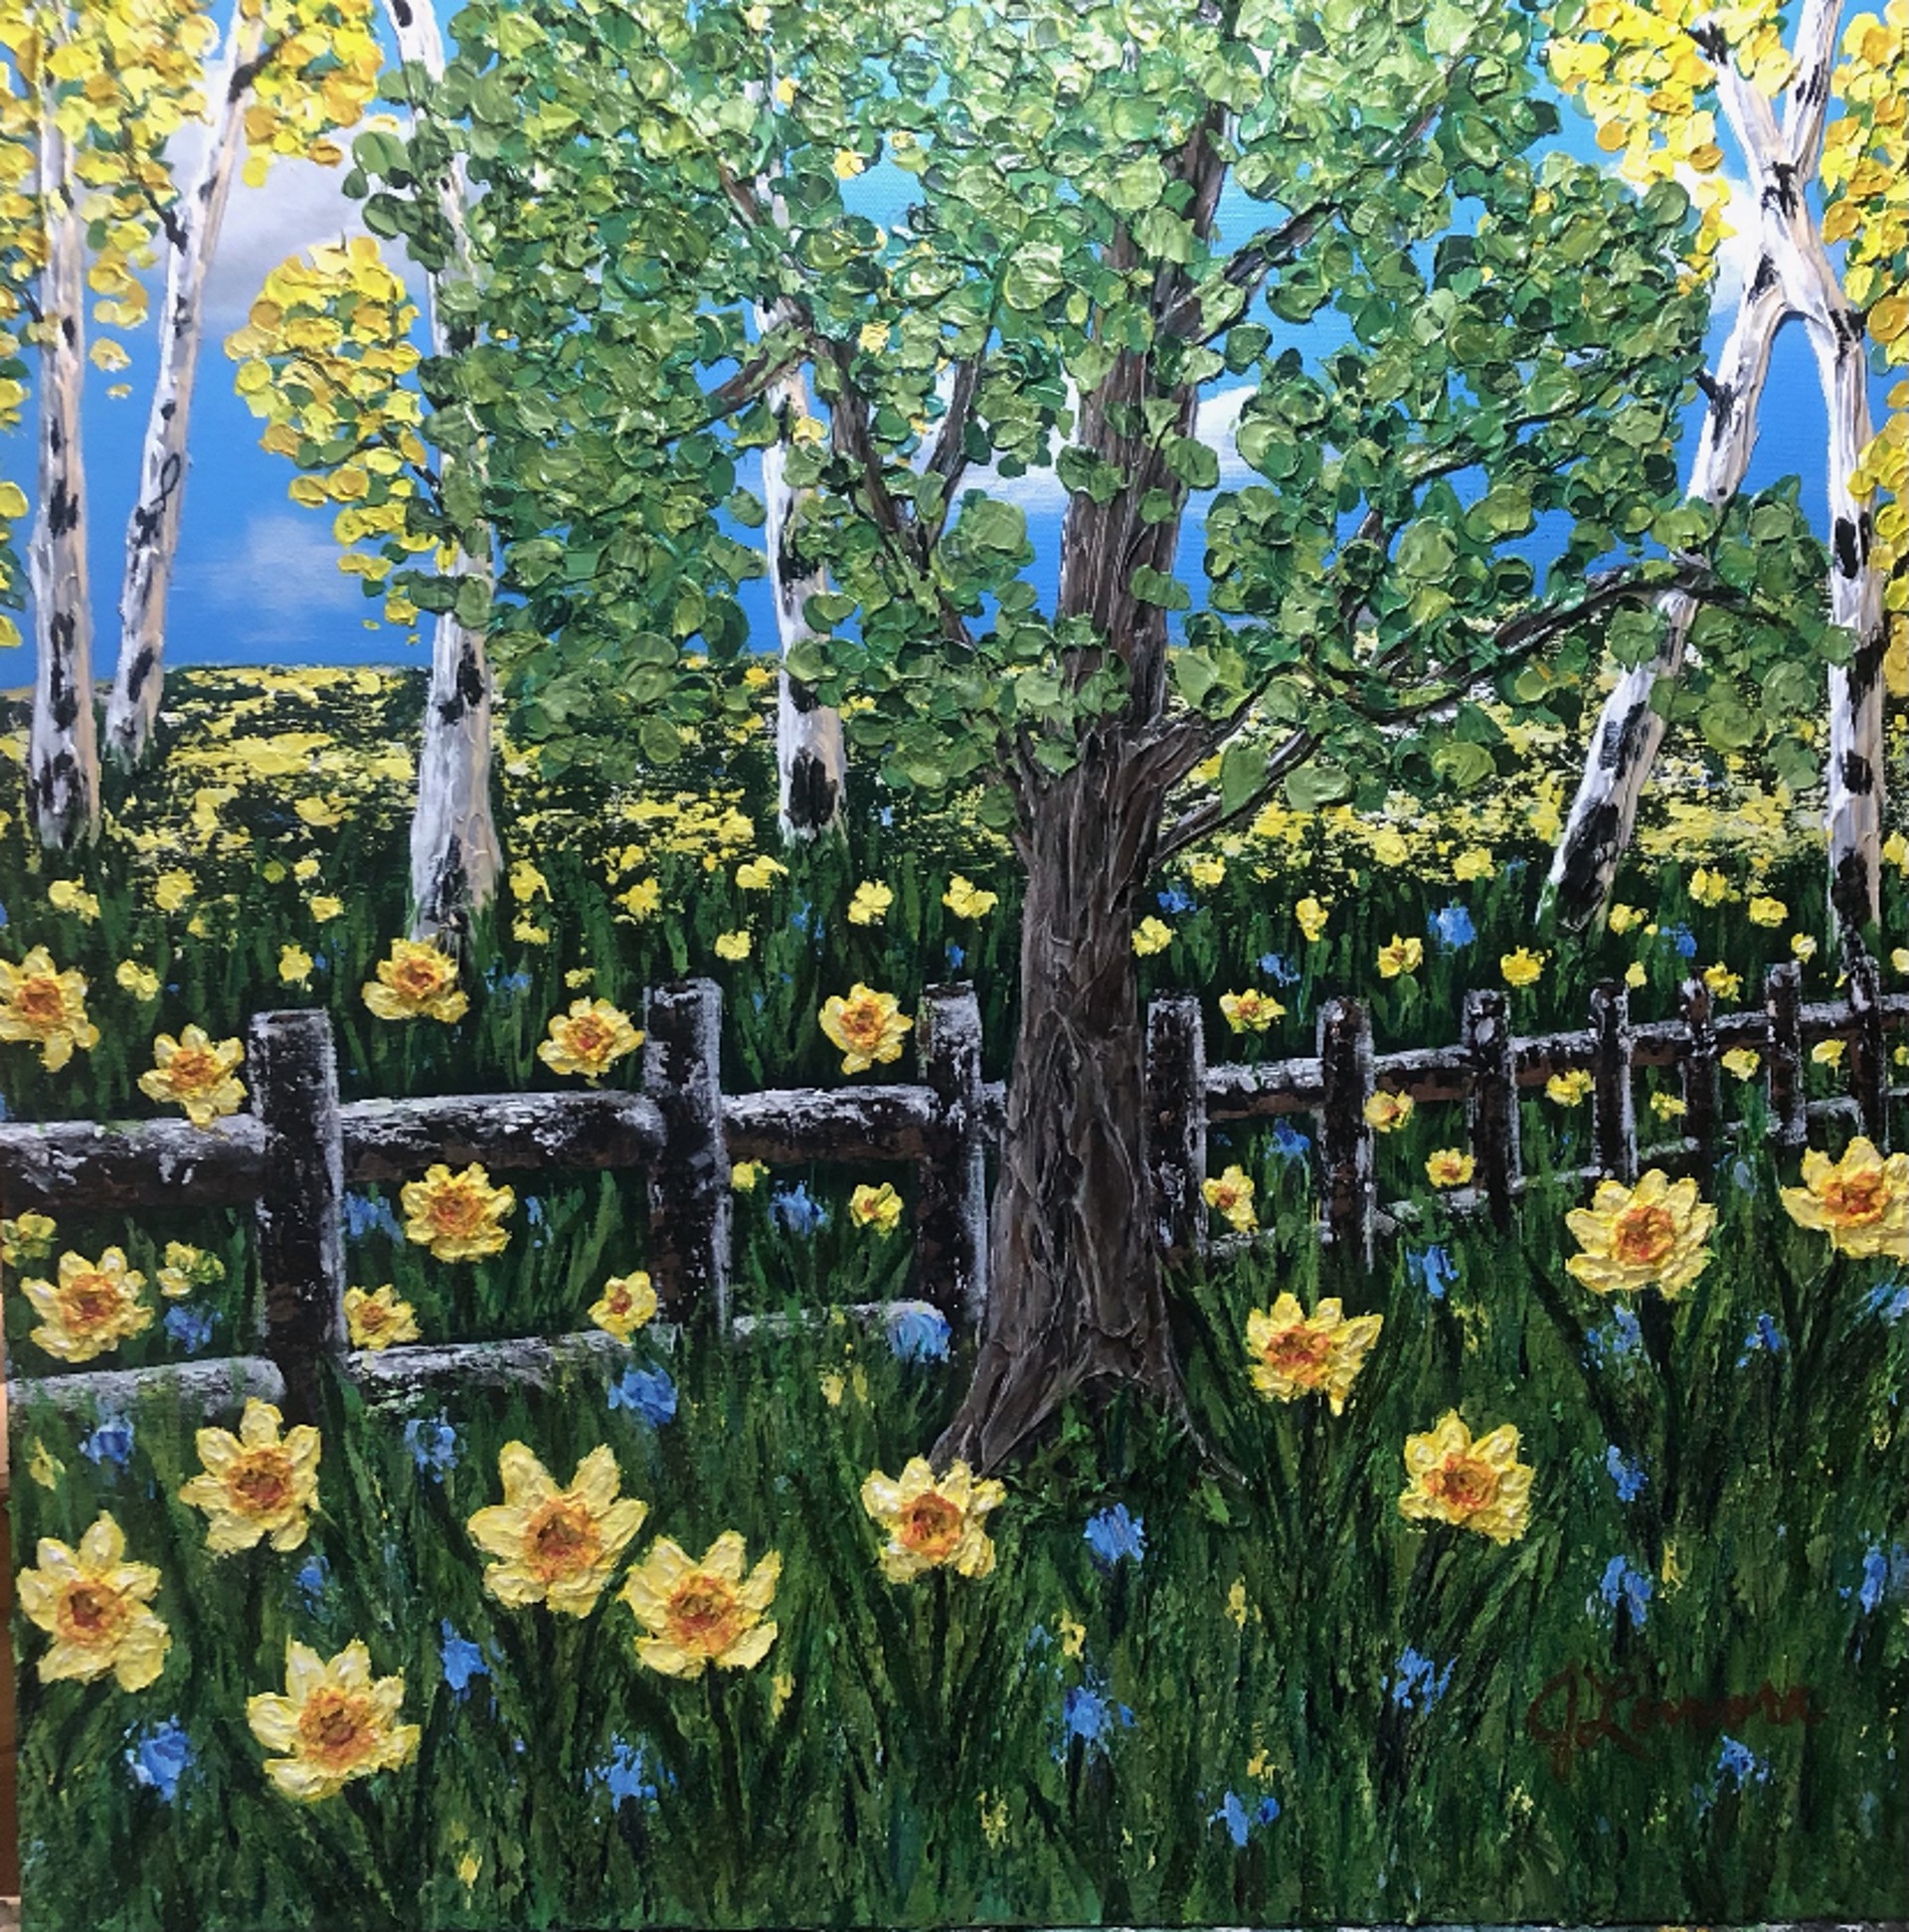 Daffodil Delight by Jane Lovvorn